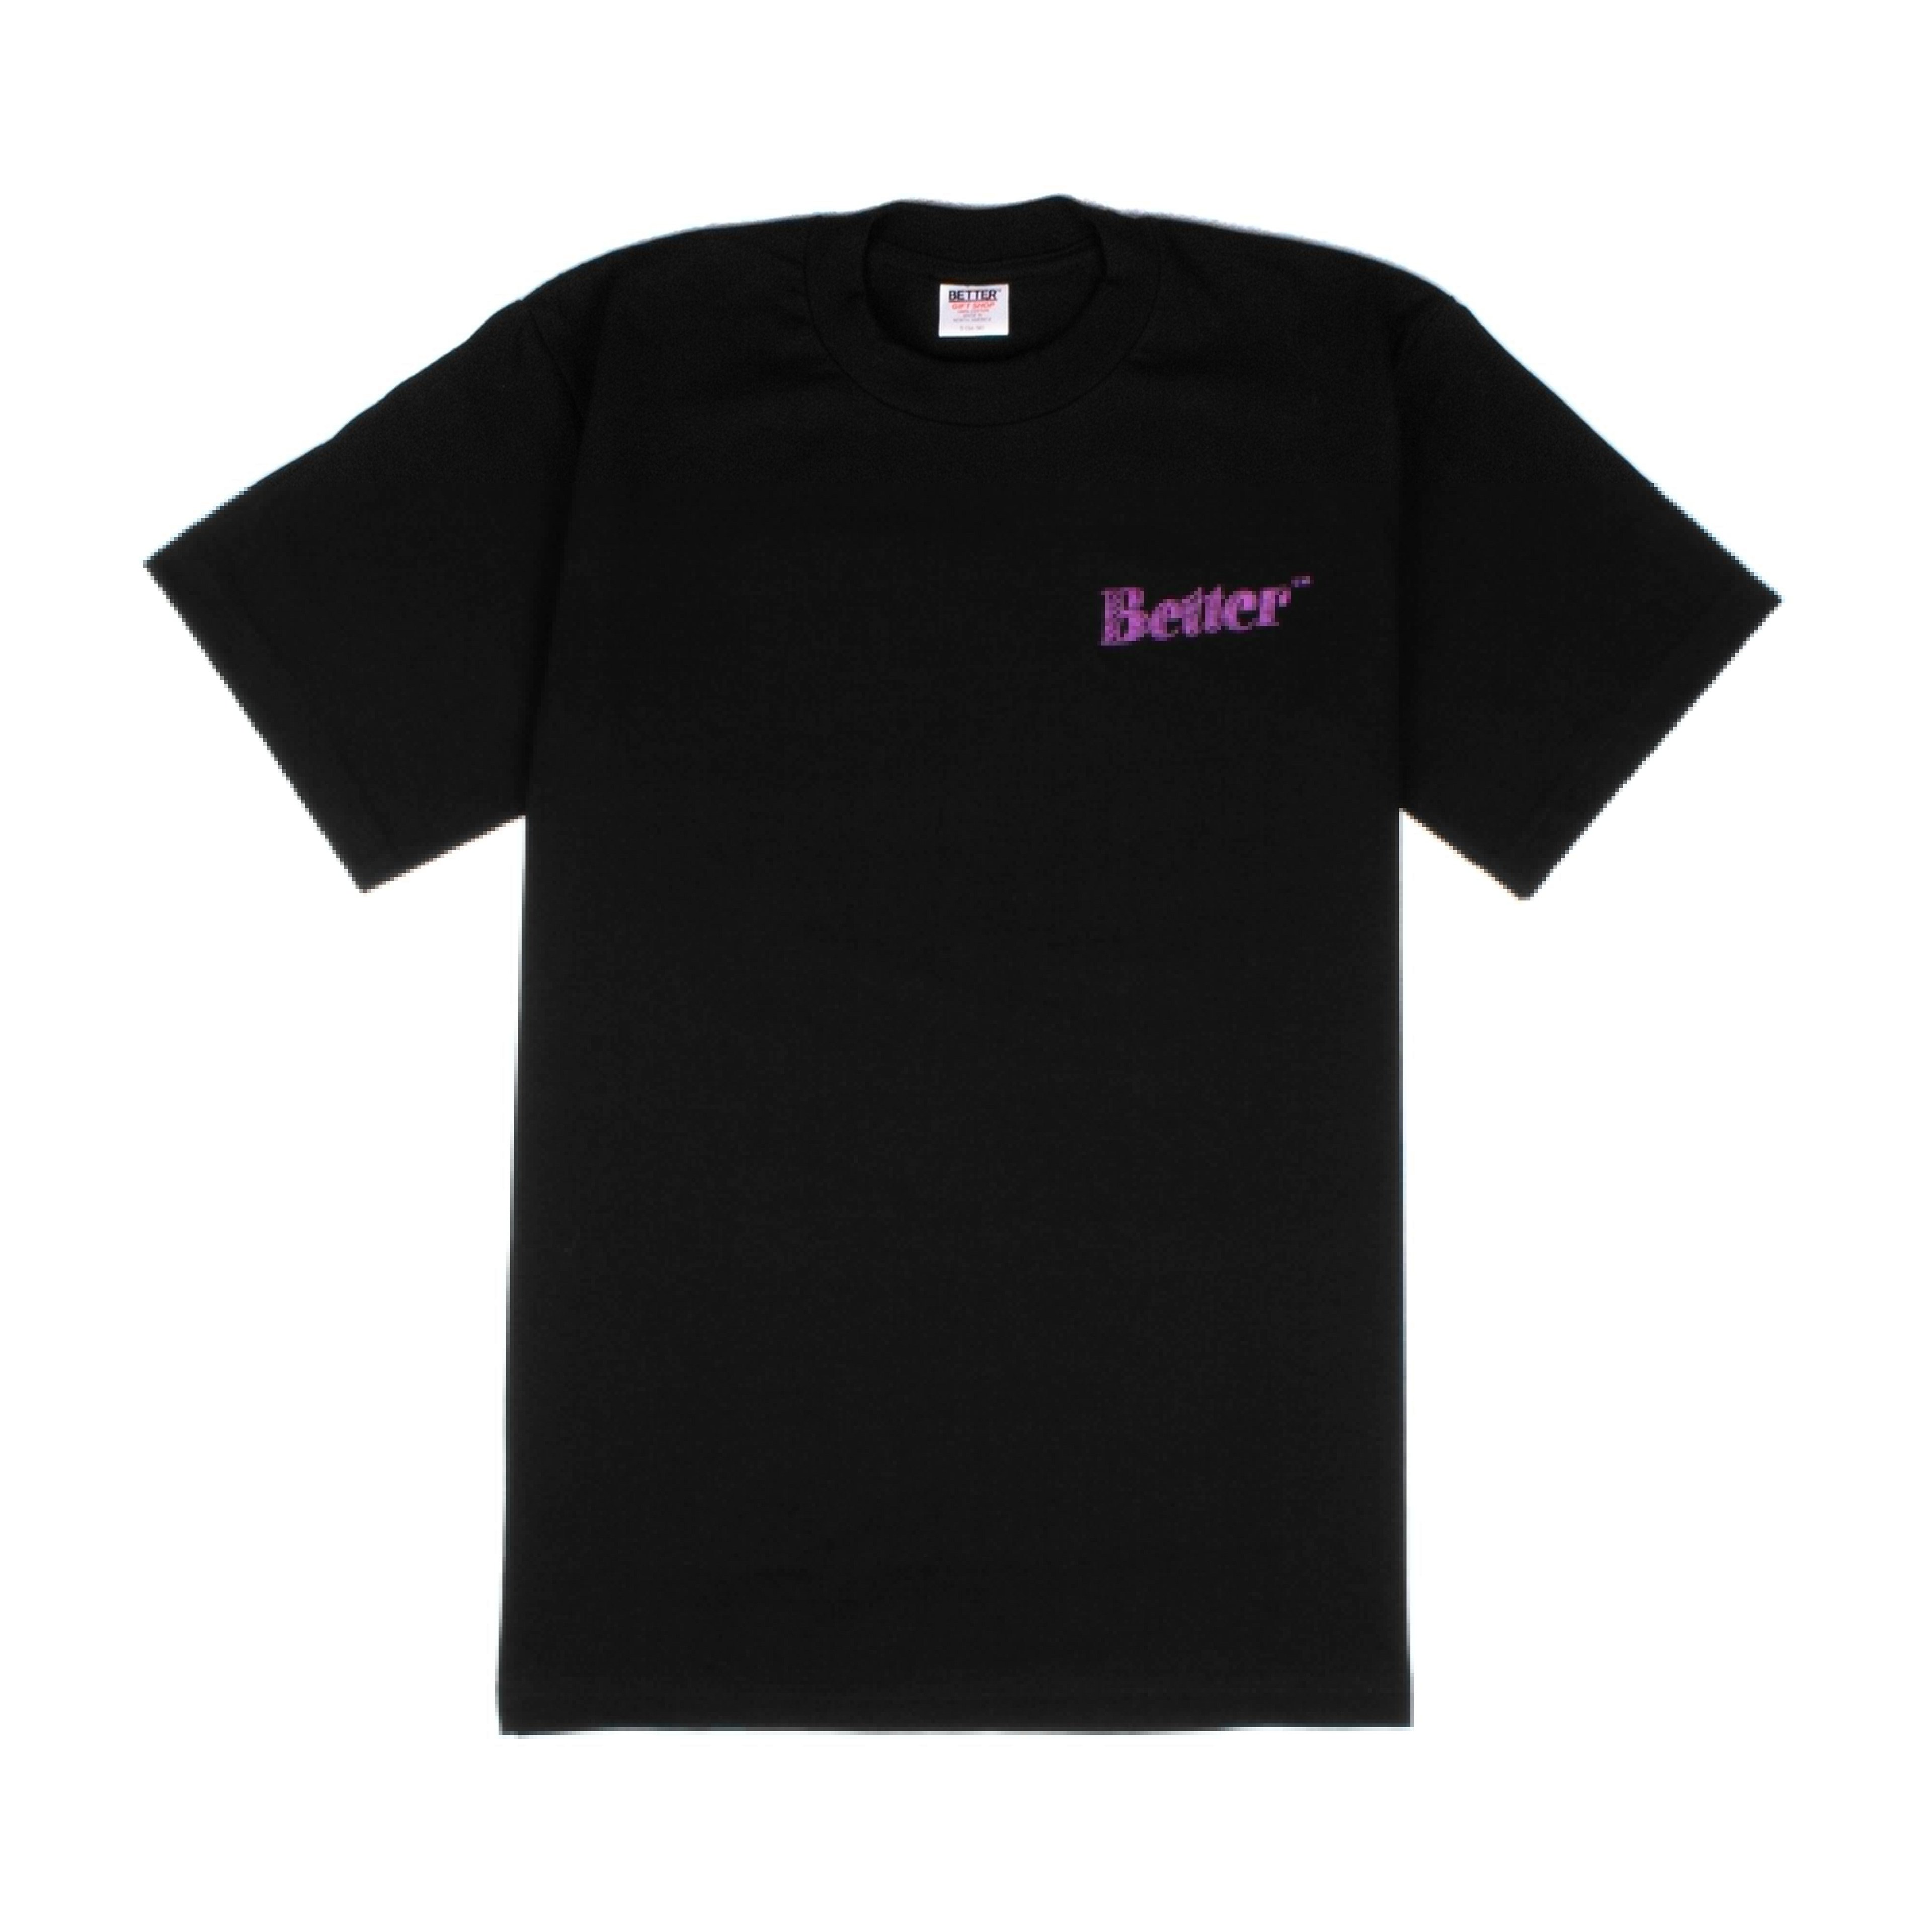 Better™ Gift Shop - Scribble Logo S/S T-Shirt - (Black) by BETTER GIFT SHOP